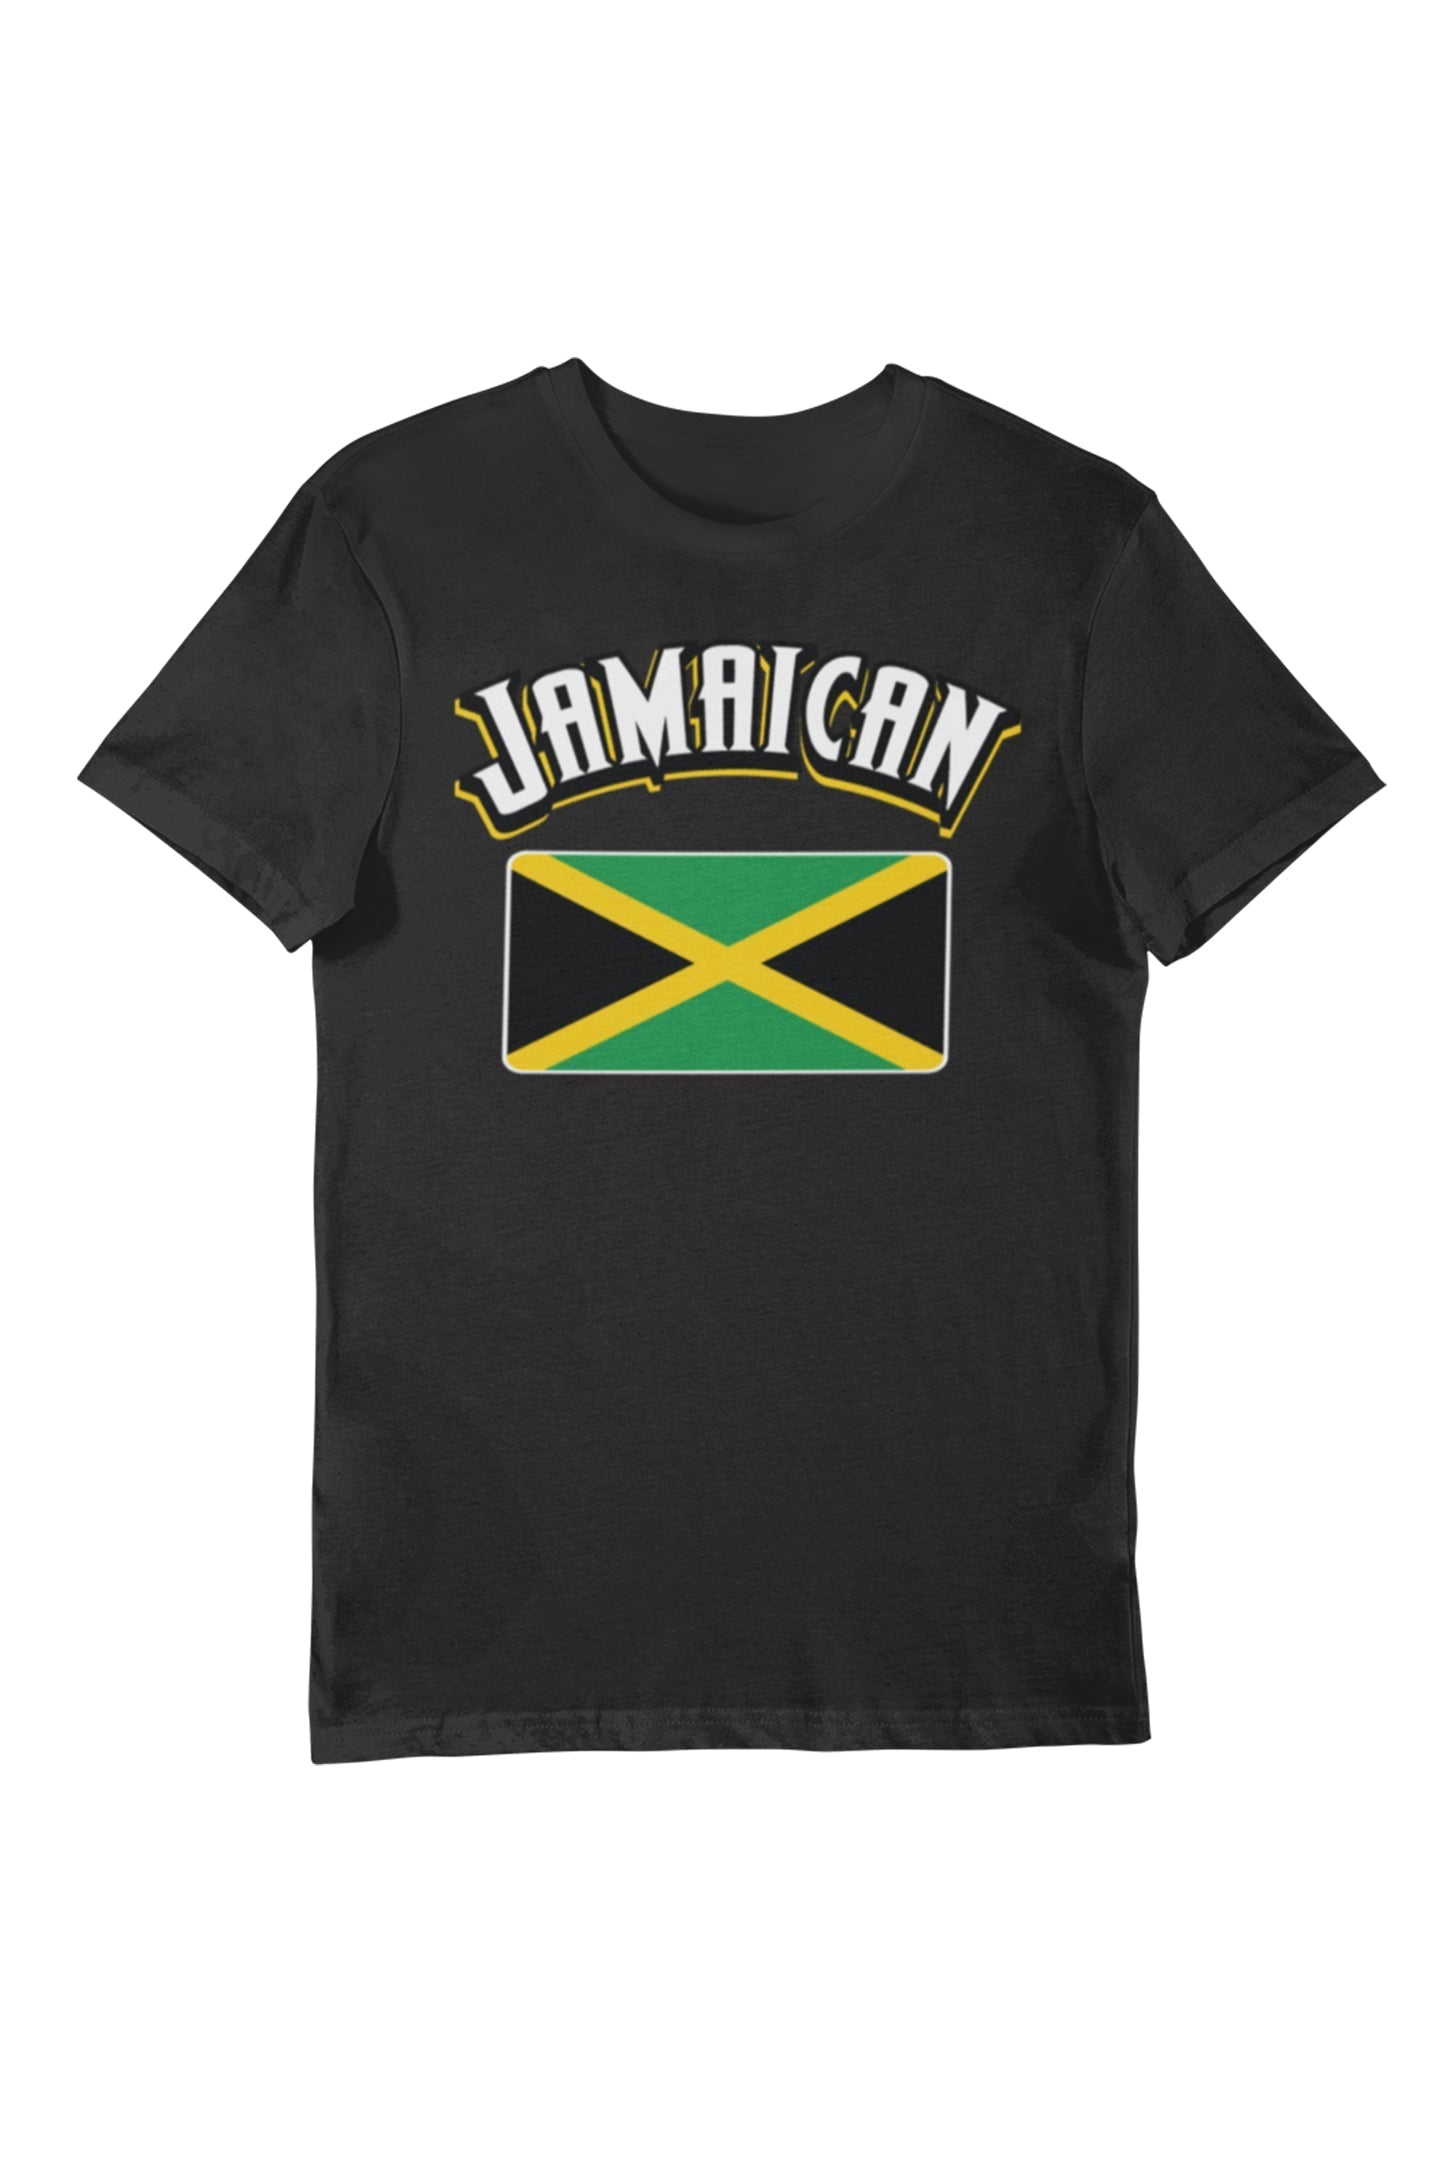 Jamaican Flag - Women's